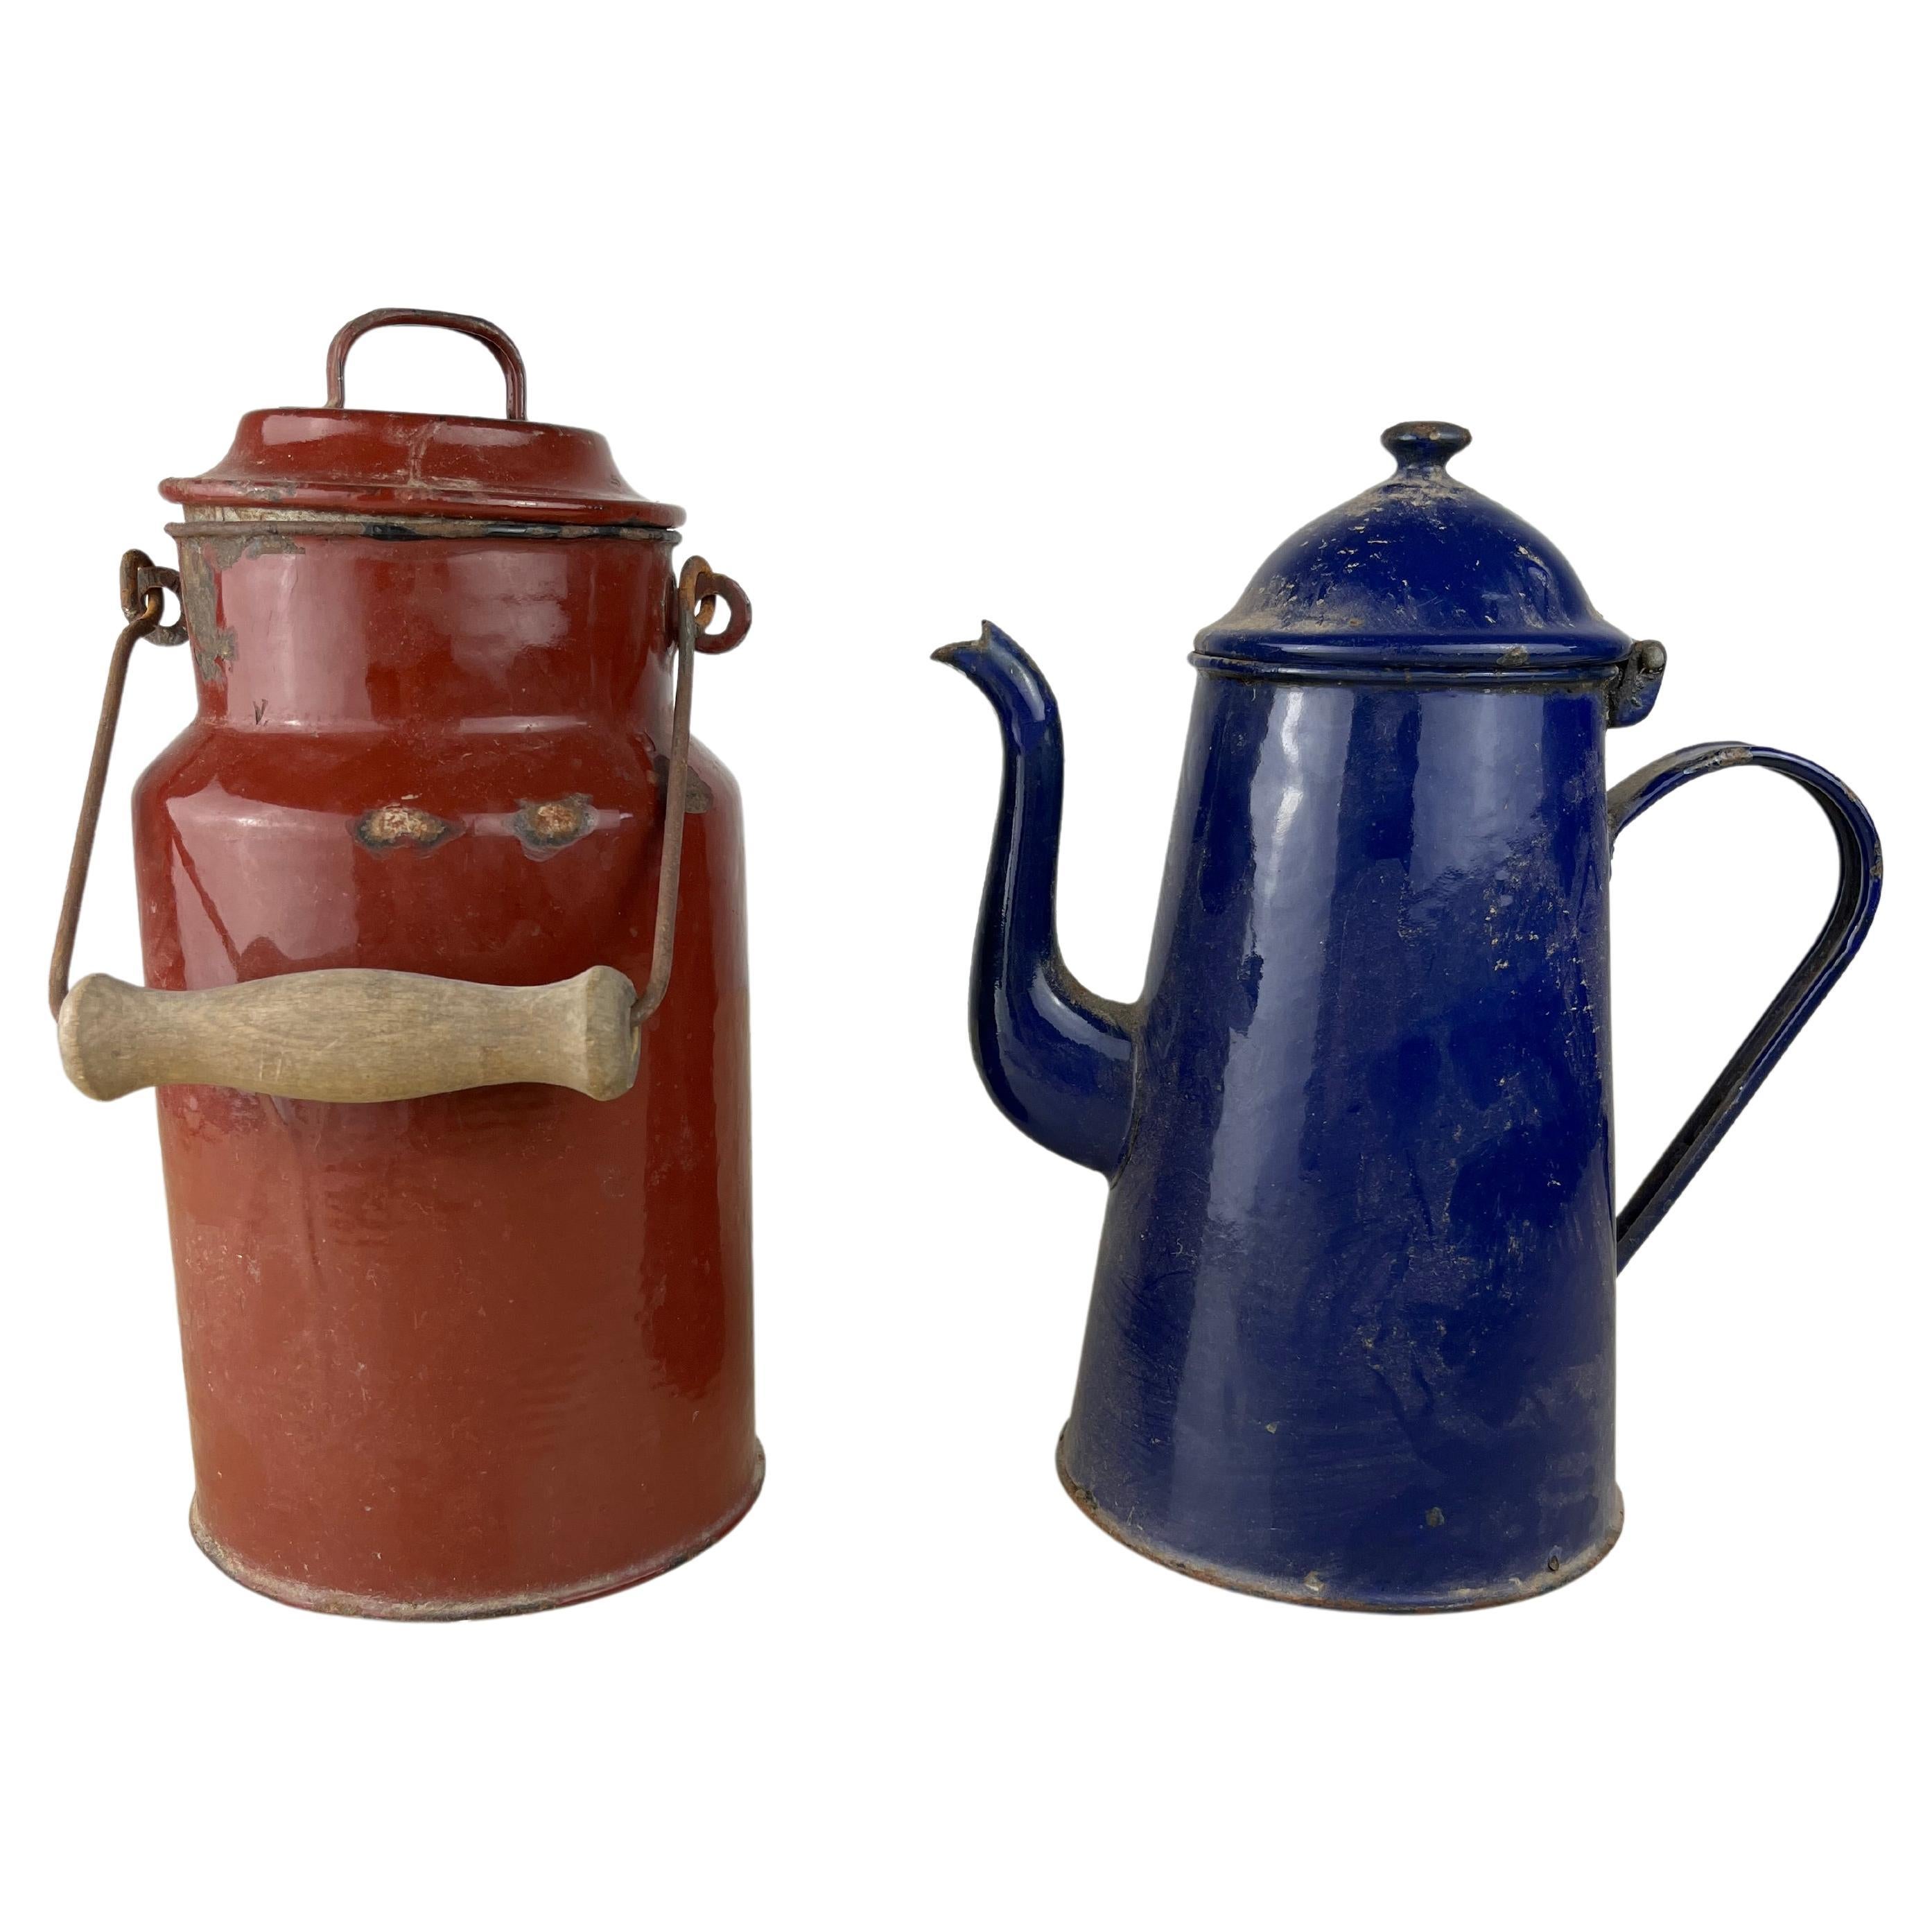 https://a.1stdibscdn.com/enamelled-metal-coffee-pot-and-milk-jug-italy-1960s-for-sale/f_83792/f_342674421683981180744/f_34267442_1683981181835_bg_processed.jpg